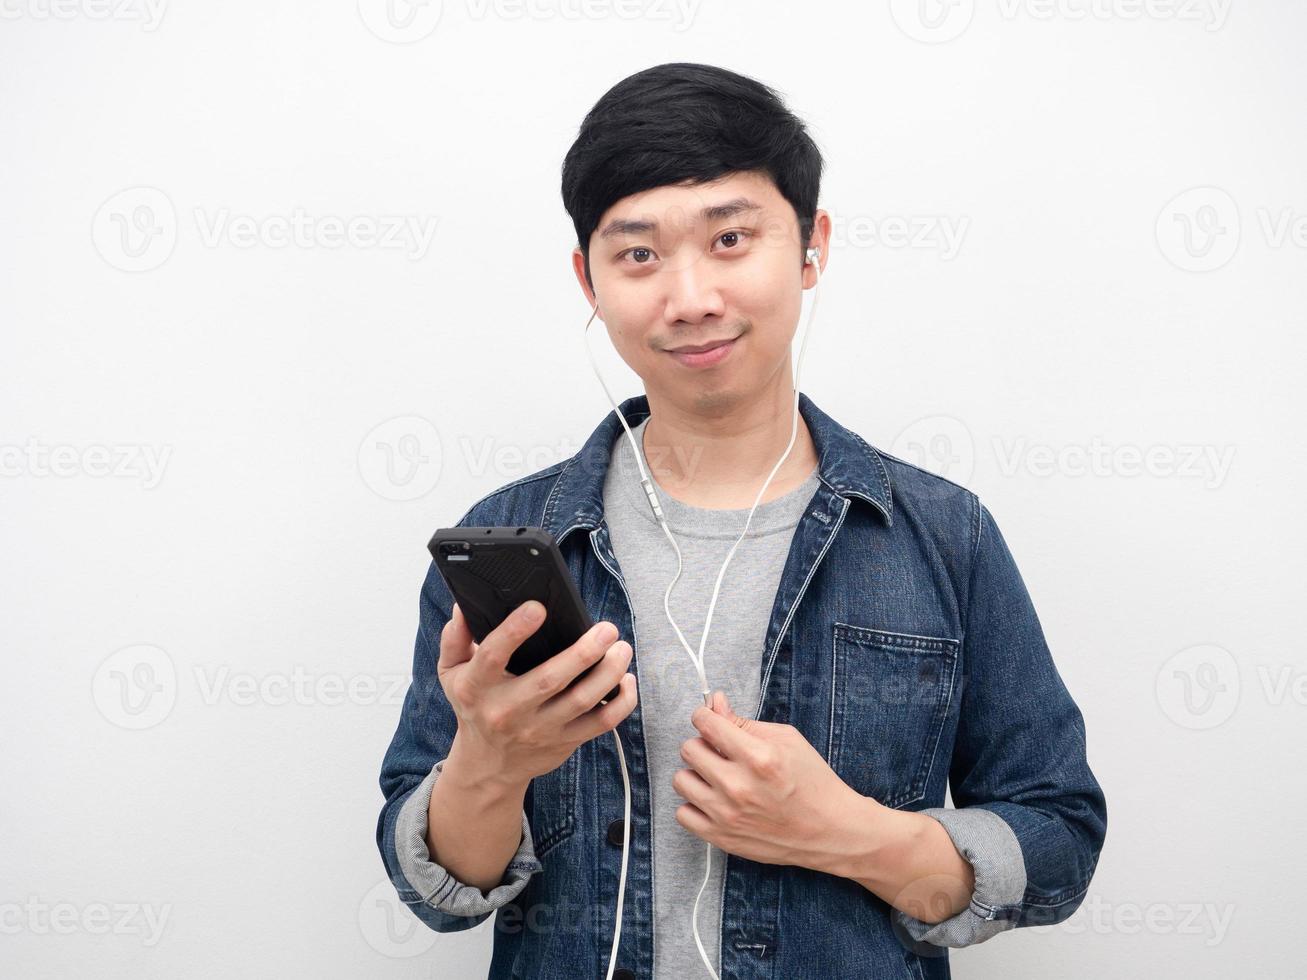 Man jeans shirt holding mobile phone using earphone portrait photo